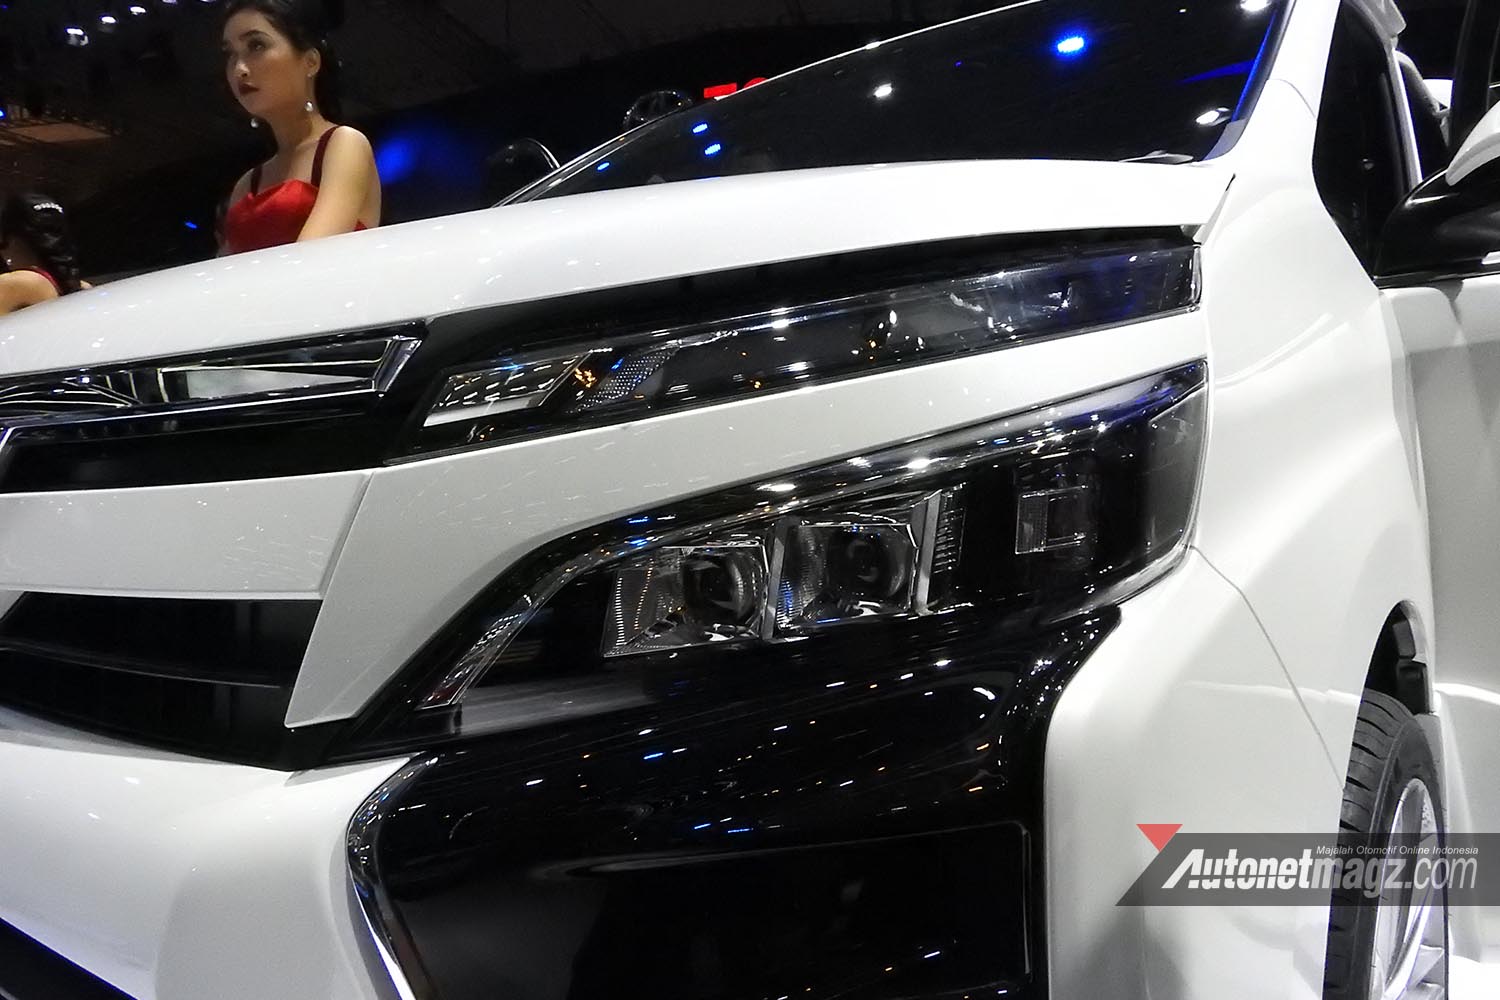 Mobil Baru, headlamp led toyota voxy: First Impression Review Toyota Voxy 2017 Indonesia